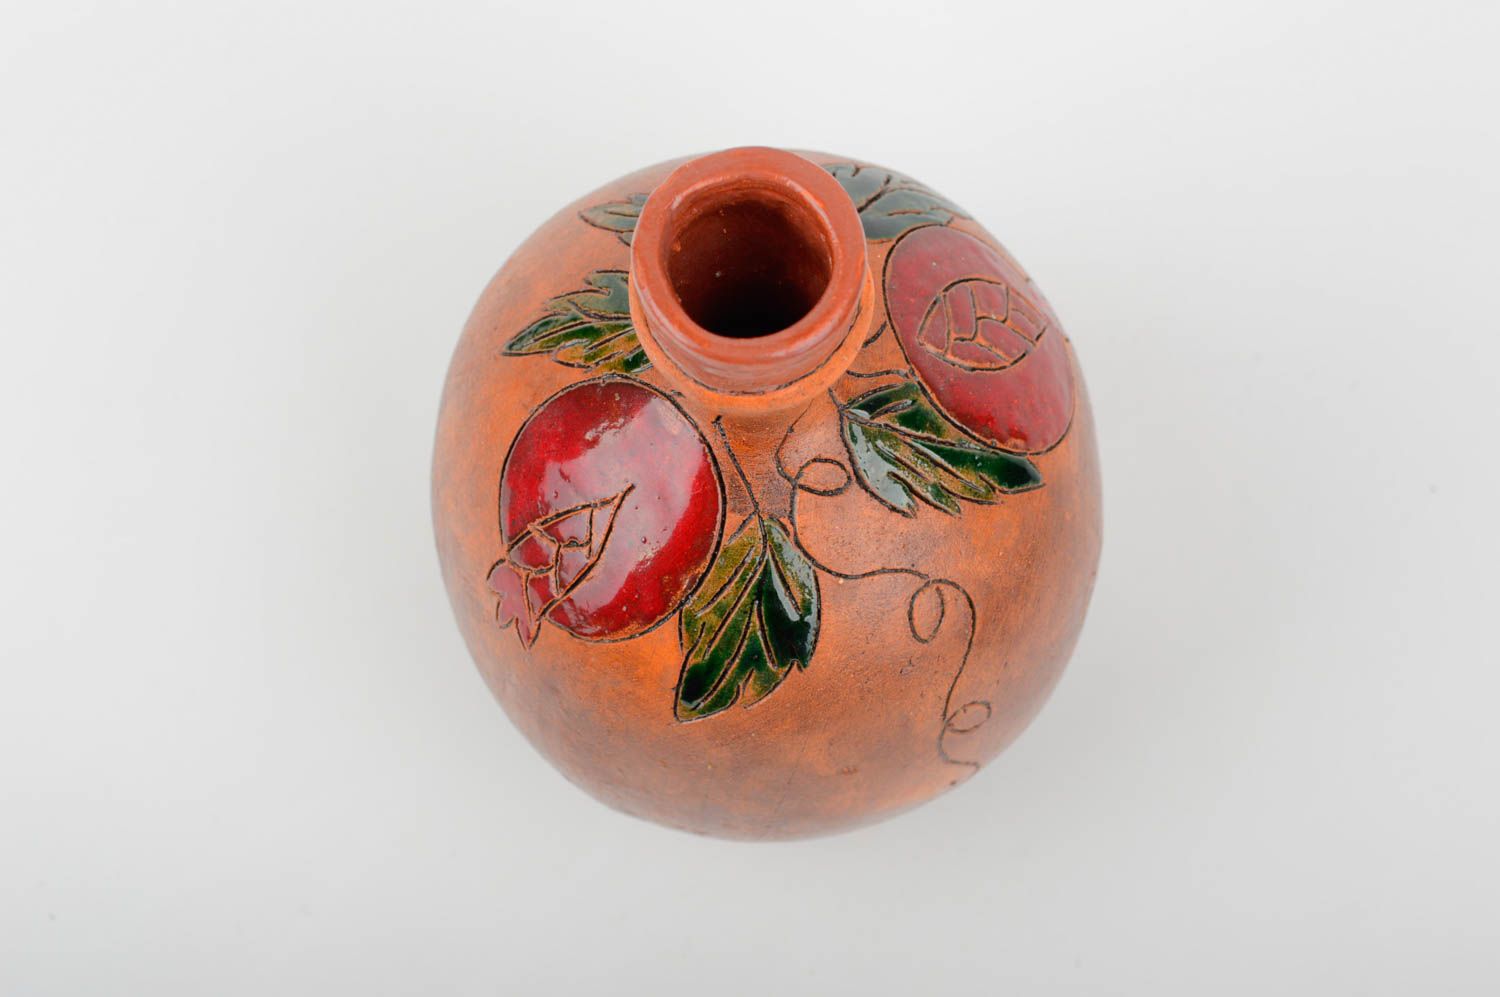 15 oz ceramic wine pitcher in ball shape 0,67 lb photo 3